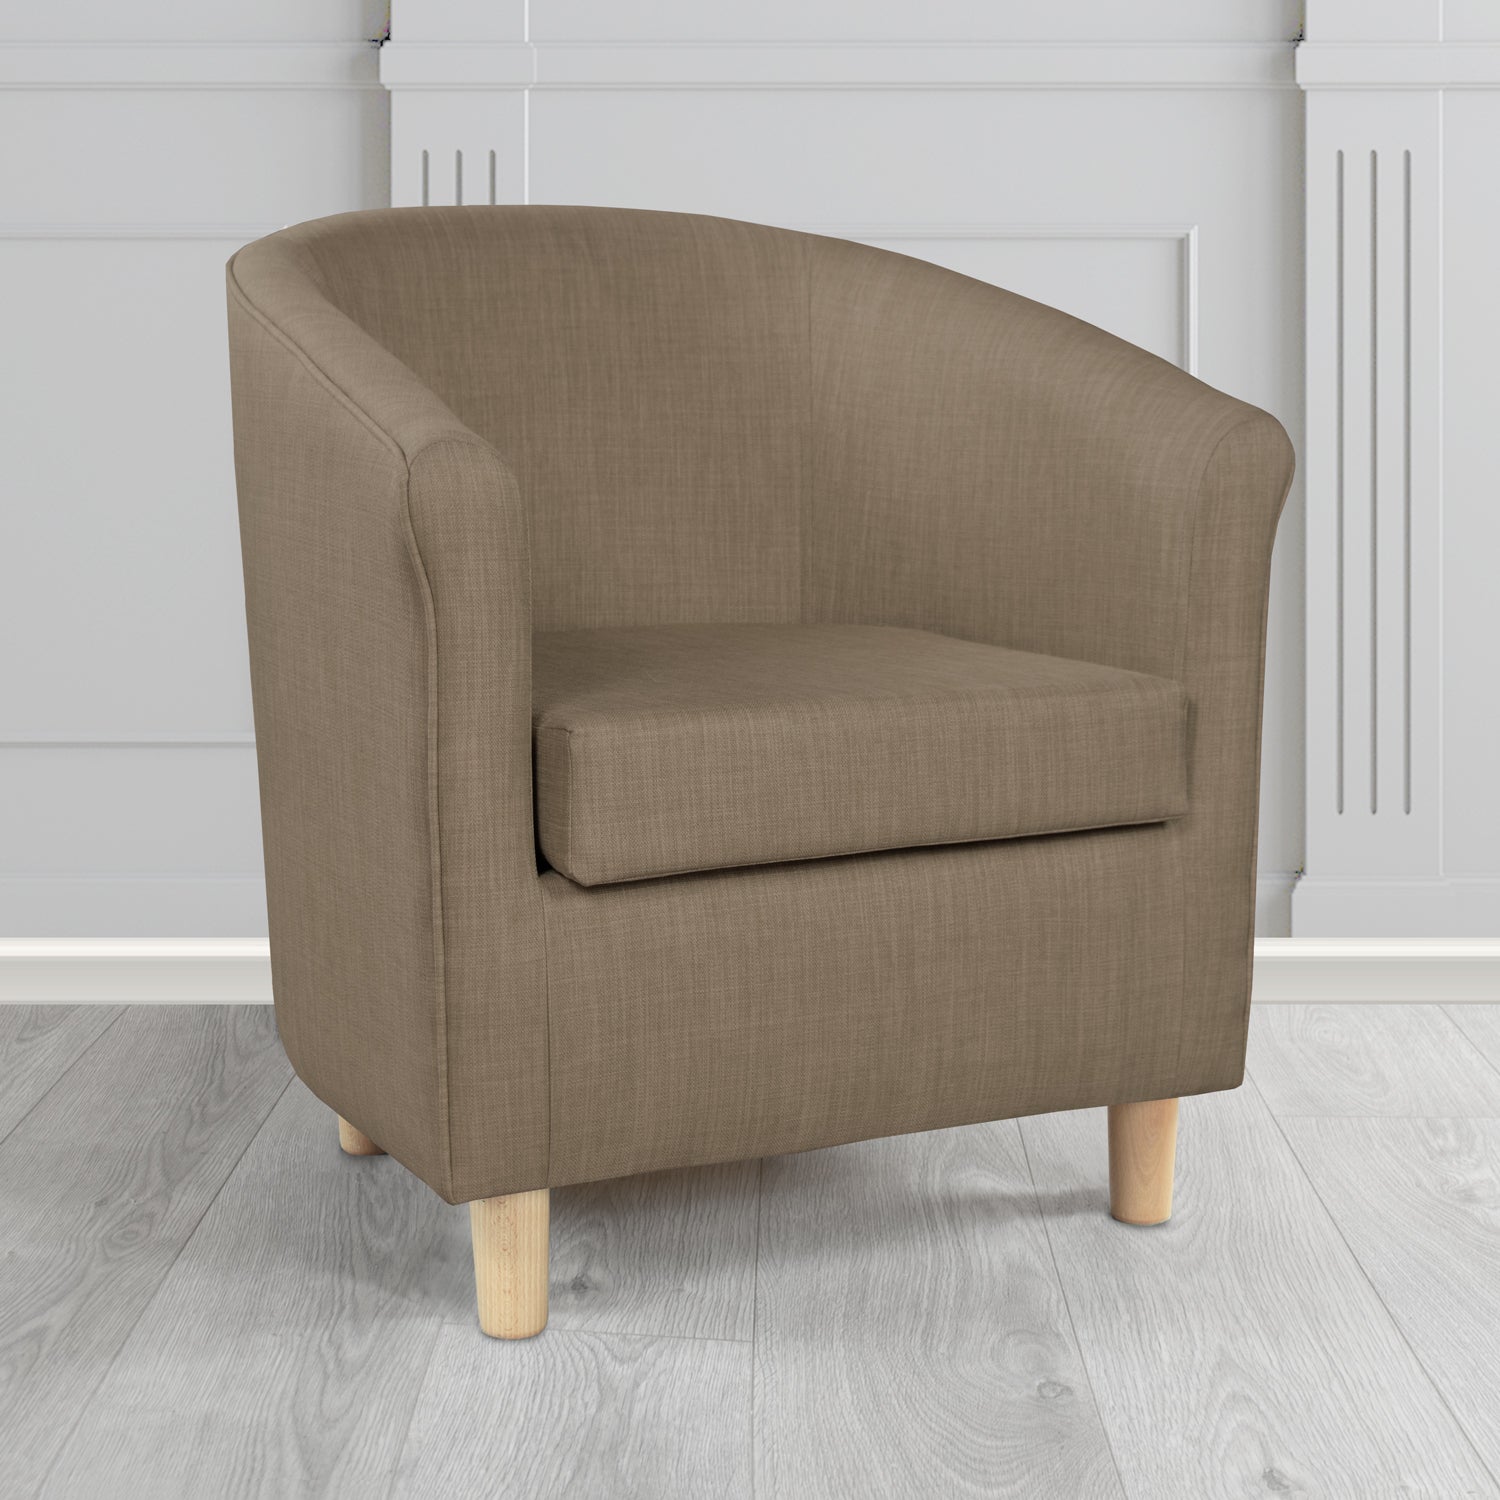 Tuscany Charles Nutmeg Plain Linen Fabric Tub Chair - The Tub Chair Shop